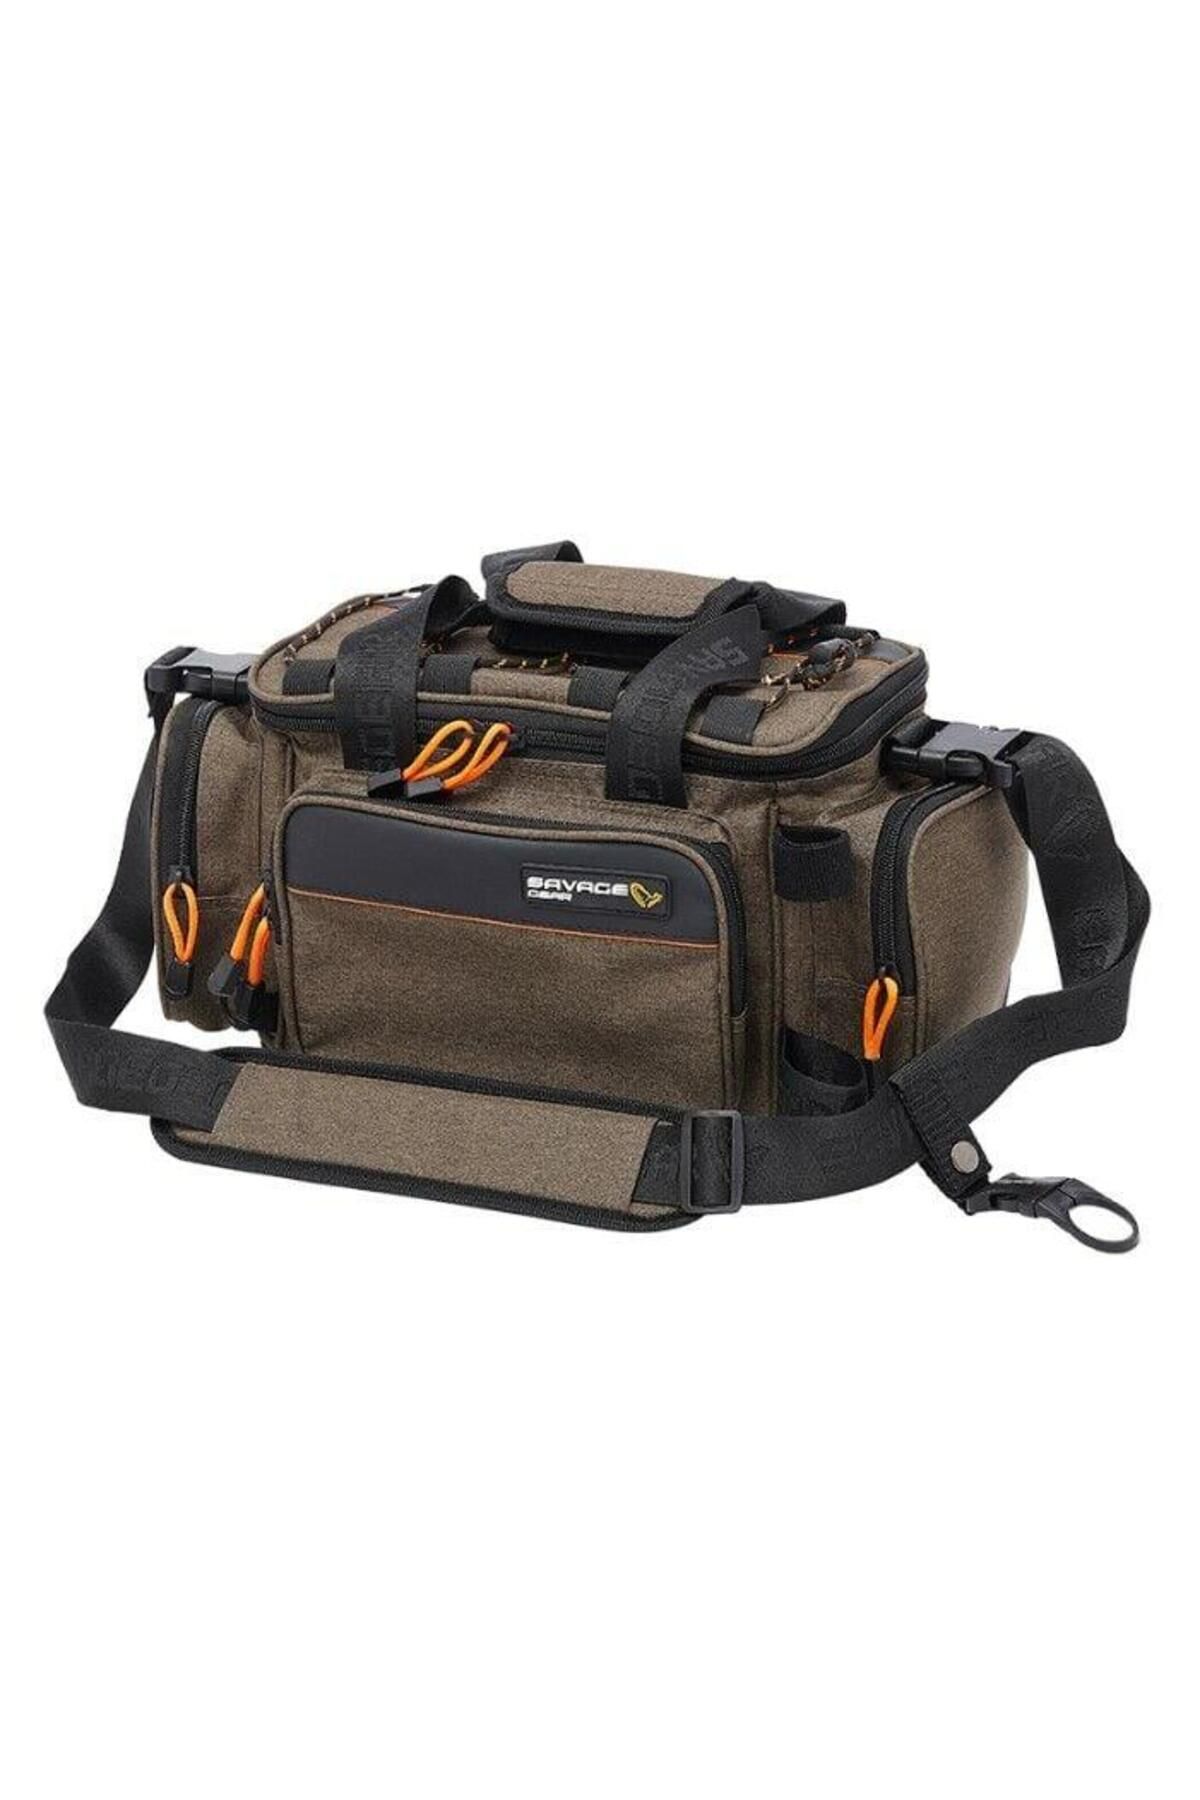 Savage Gear Specialist Soft Lure Bag 1 Box 10 Bags 21x38x22cm 10 L